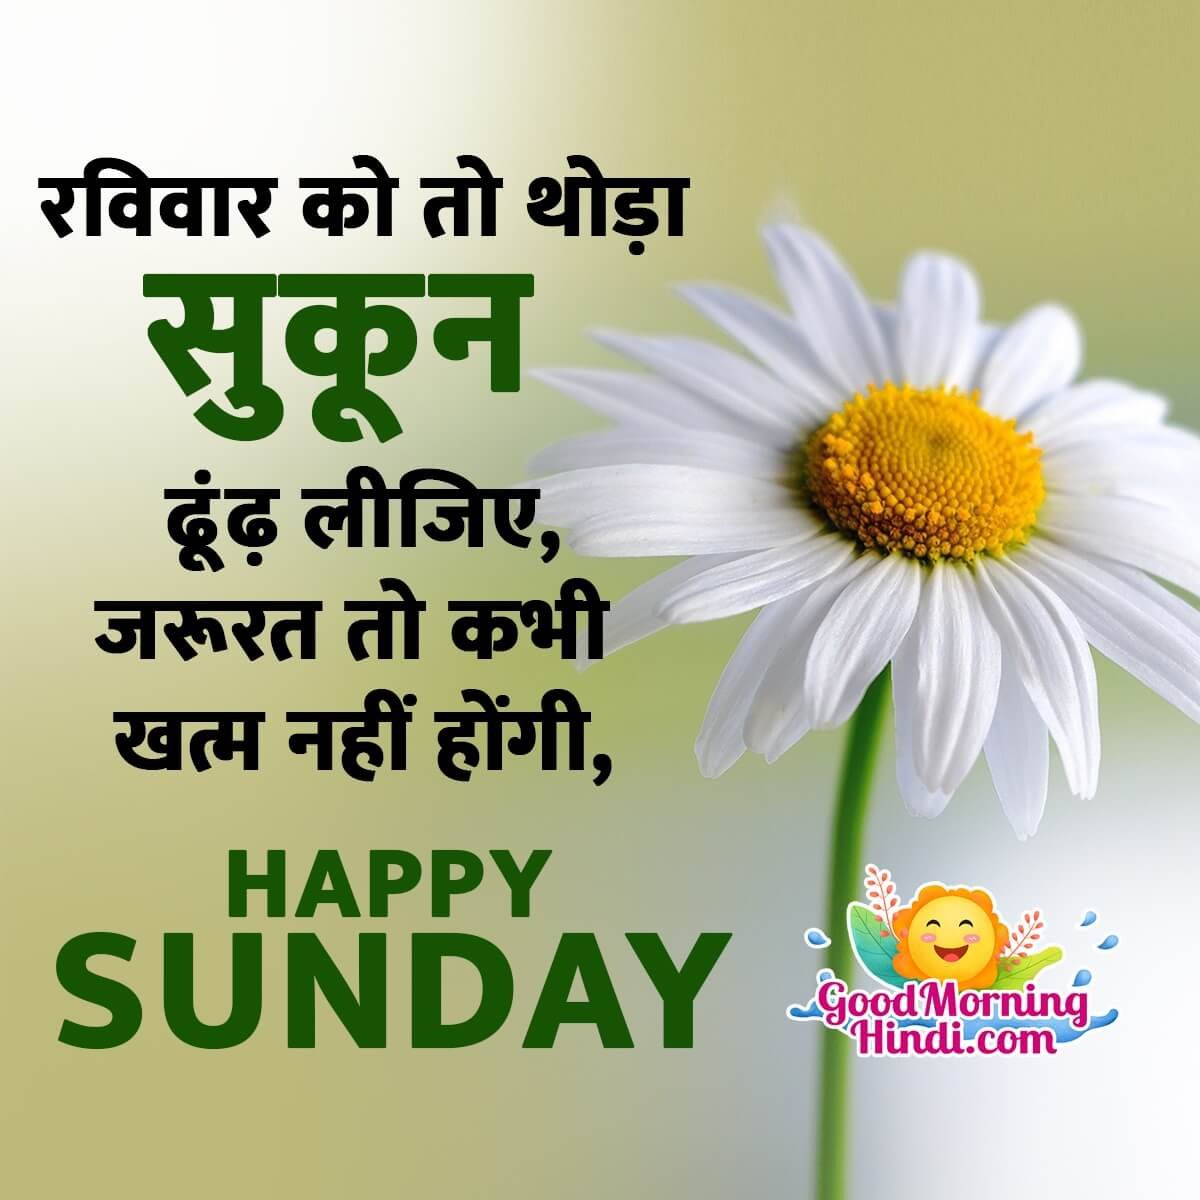 Happy Sunday Hindi Status Image